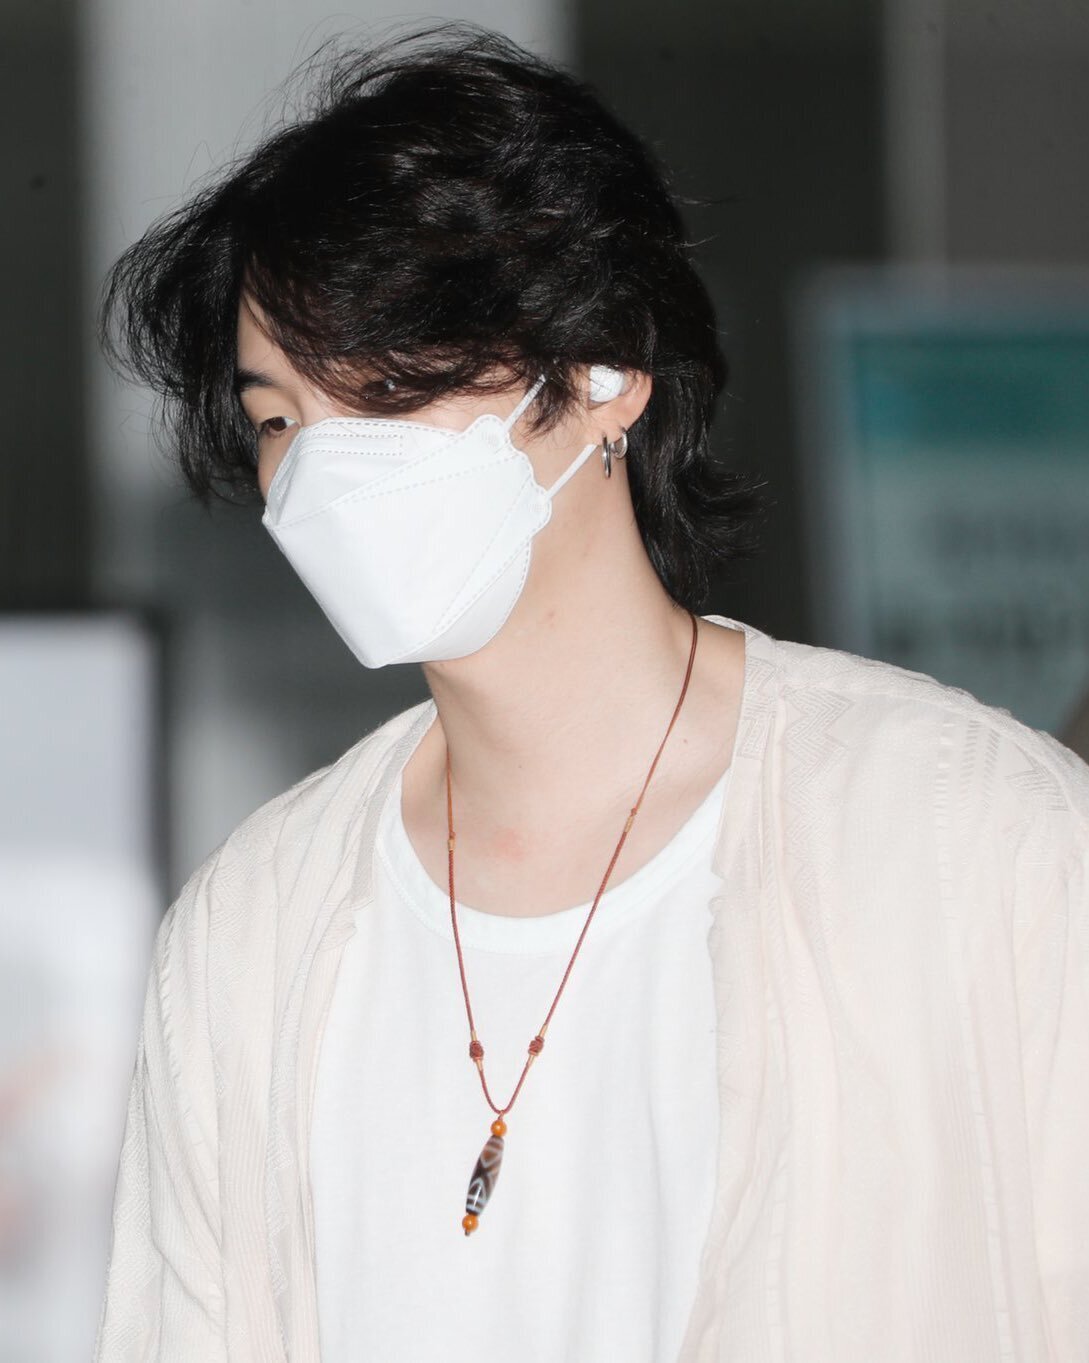 Photo] Suga, Superstar's airport departure